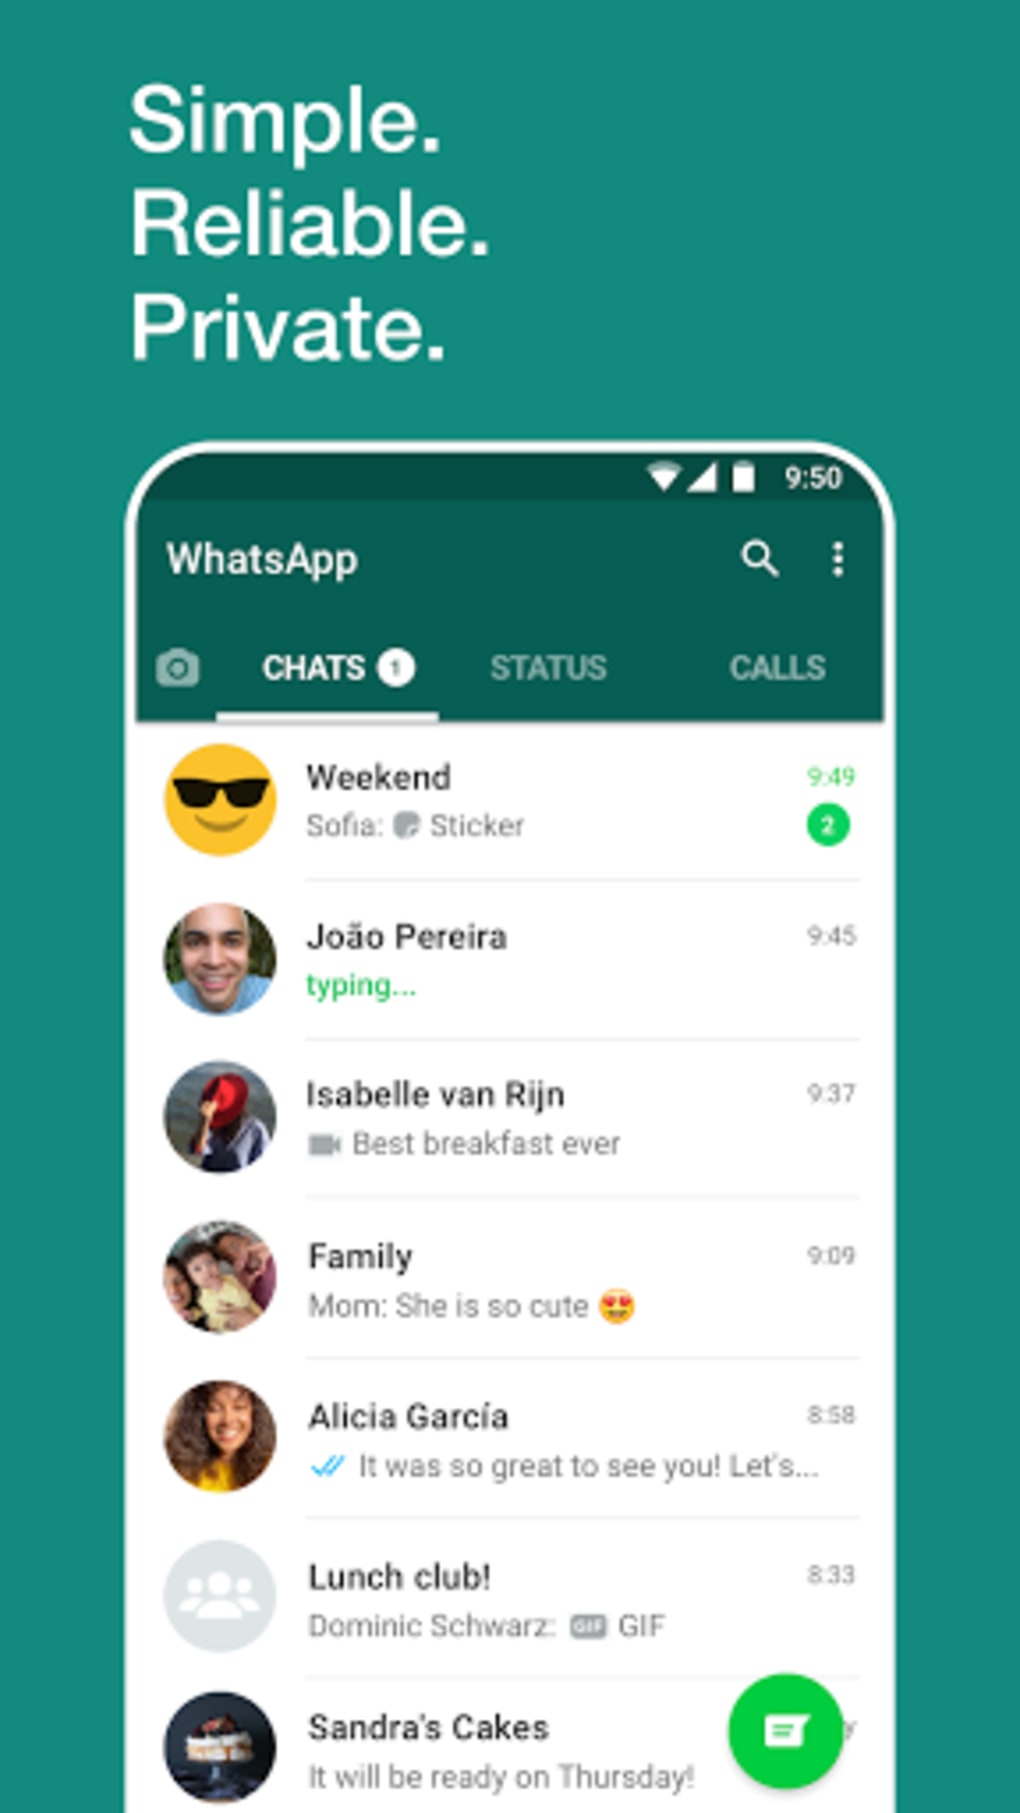 whatsapp messenger apk download